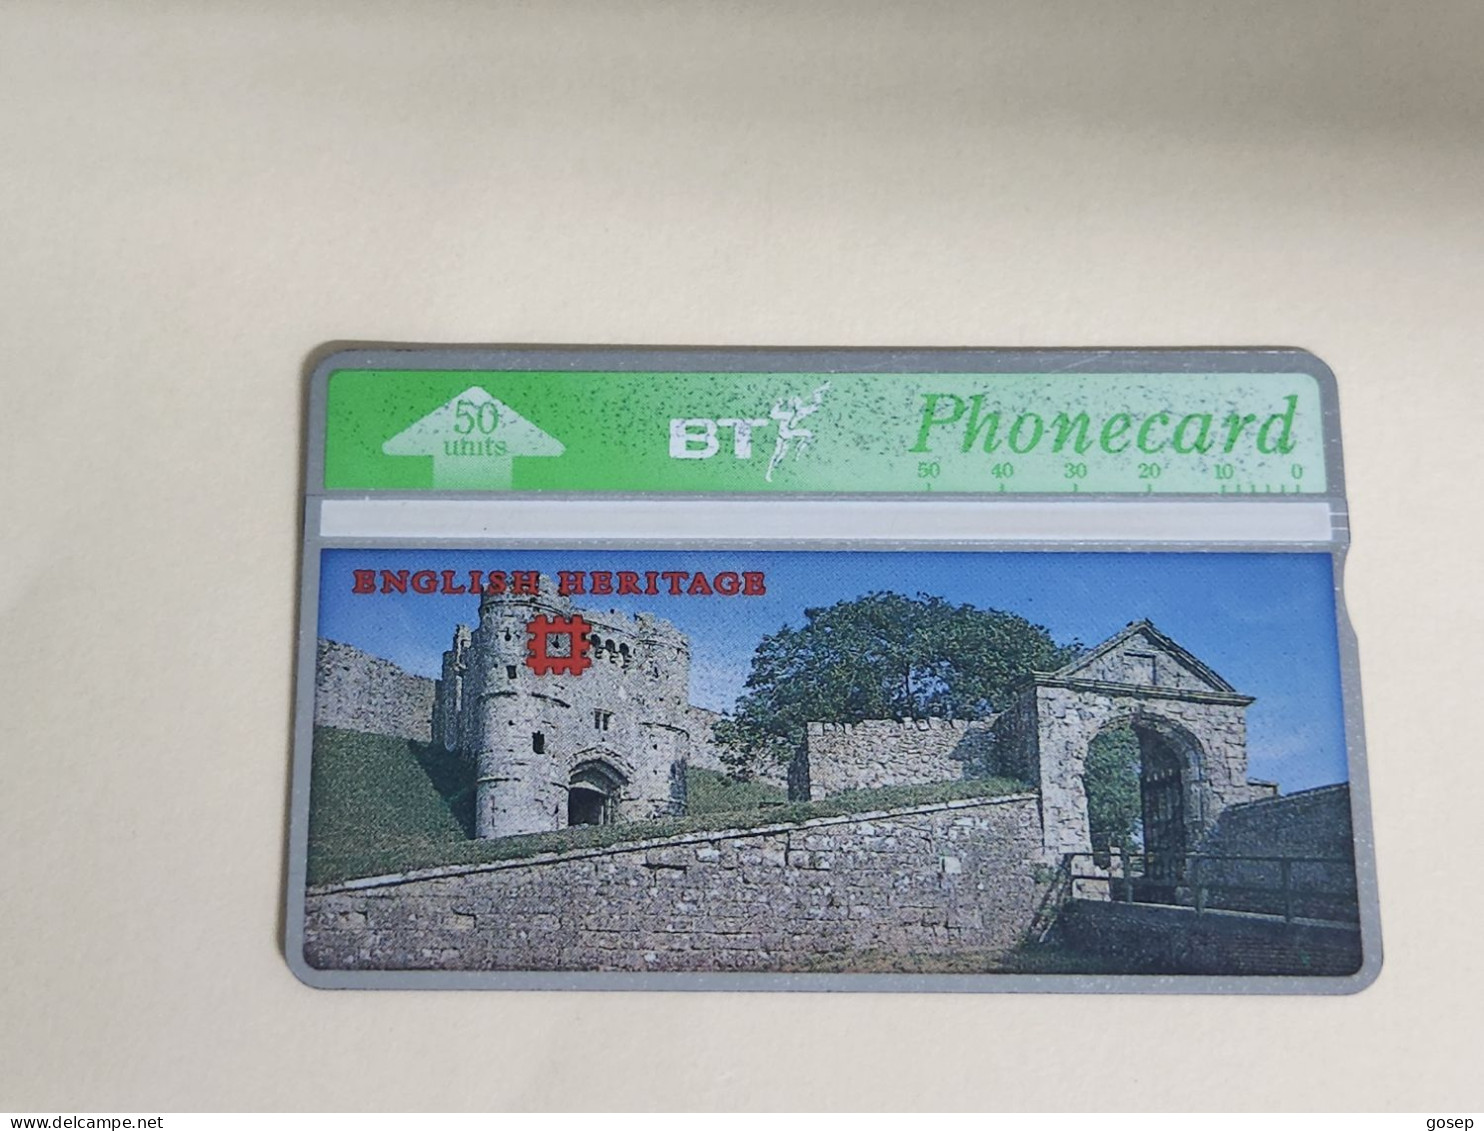 United Kingdom-(BTA105)-HERITAGE-carisbrooke Castle-(171)(50units)(508E91539)price Cataloge8.00£-mint+1card Prepiad Free - BT Edición Publicitaria